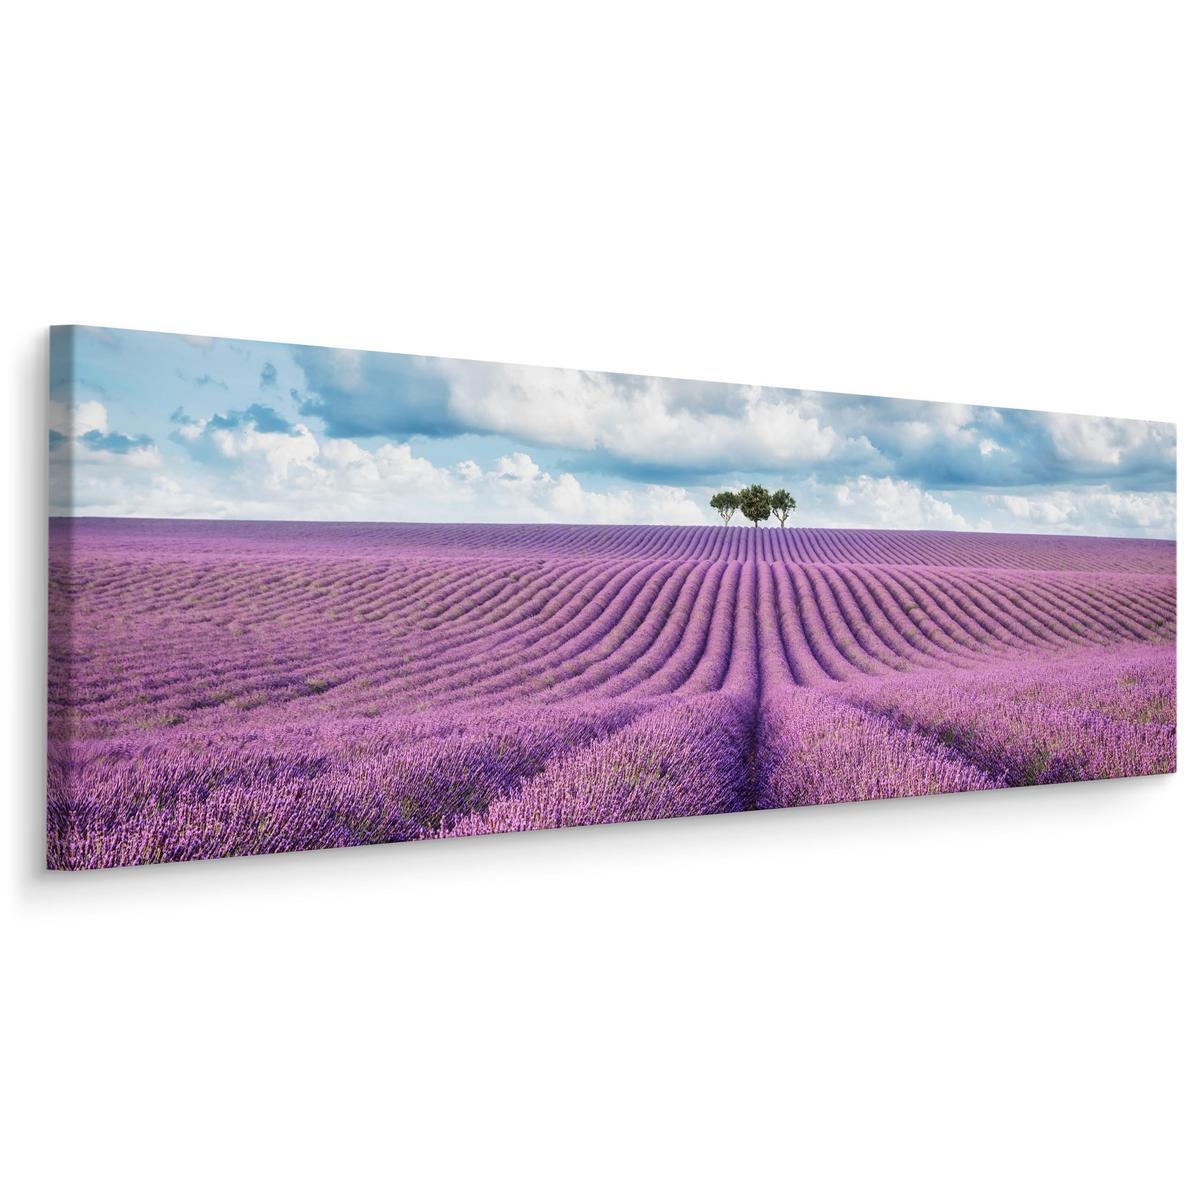 Obraz Do Jadalni Pole LAWENDY Panorama Kwiaty Natura 145x45cm 0 Full Screen